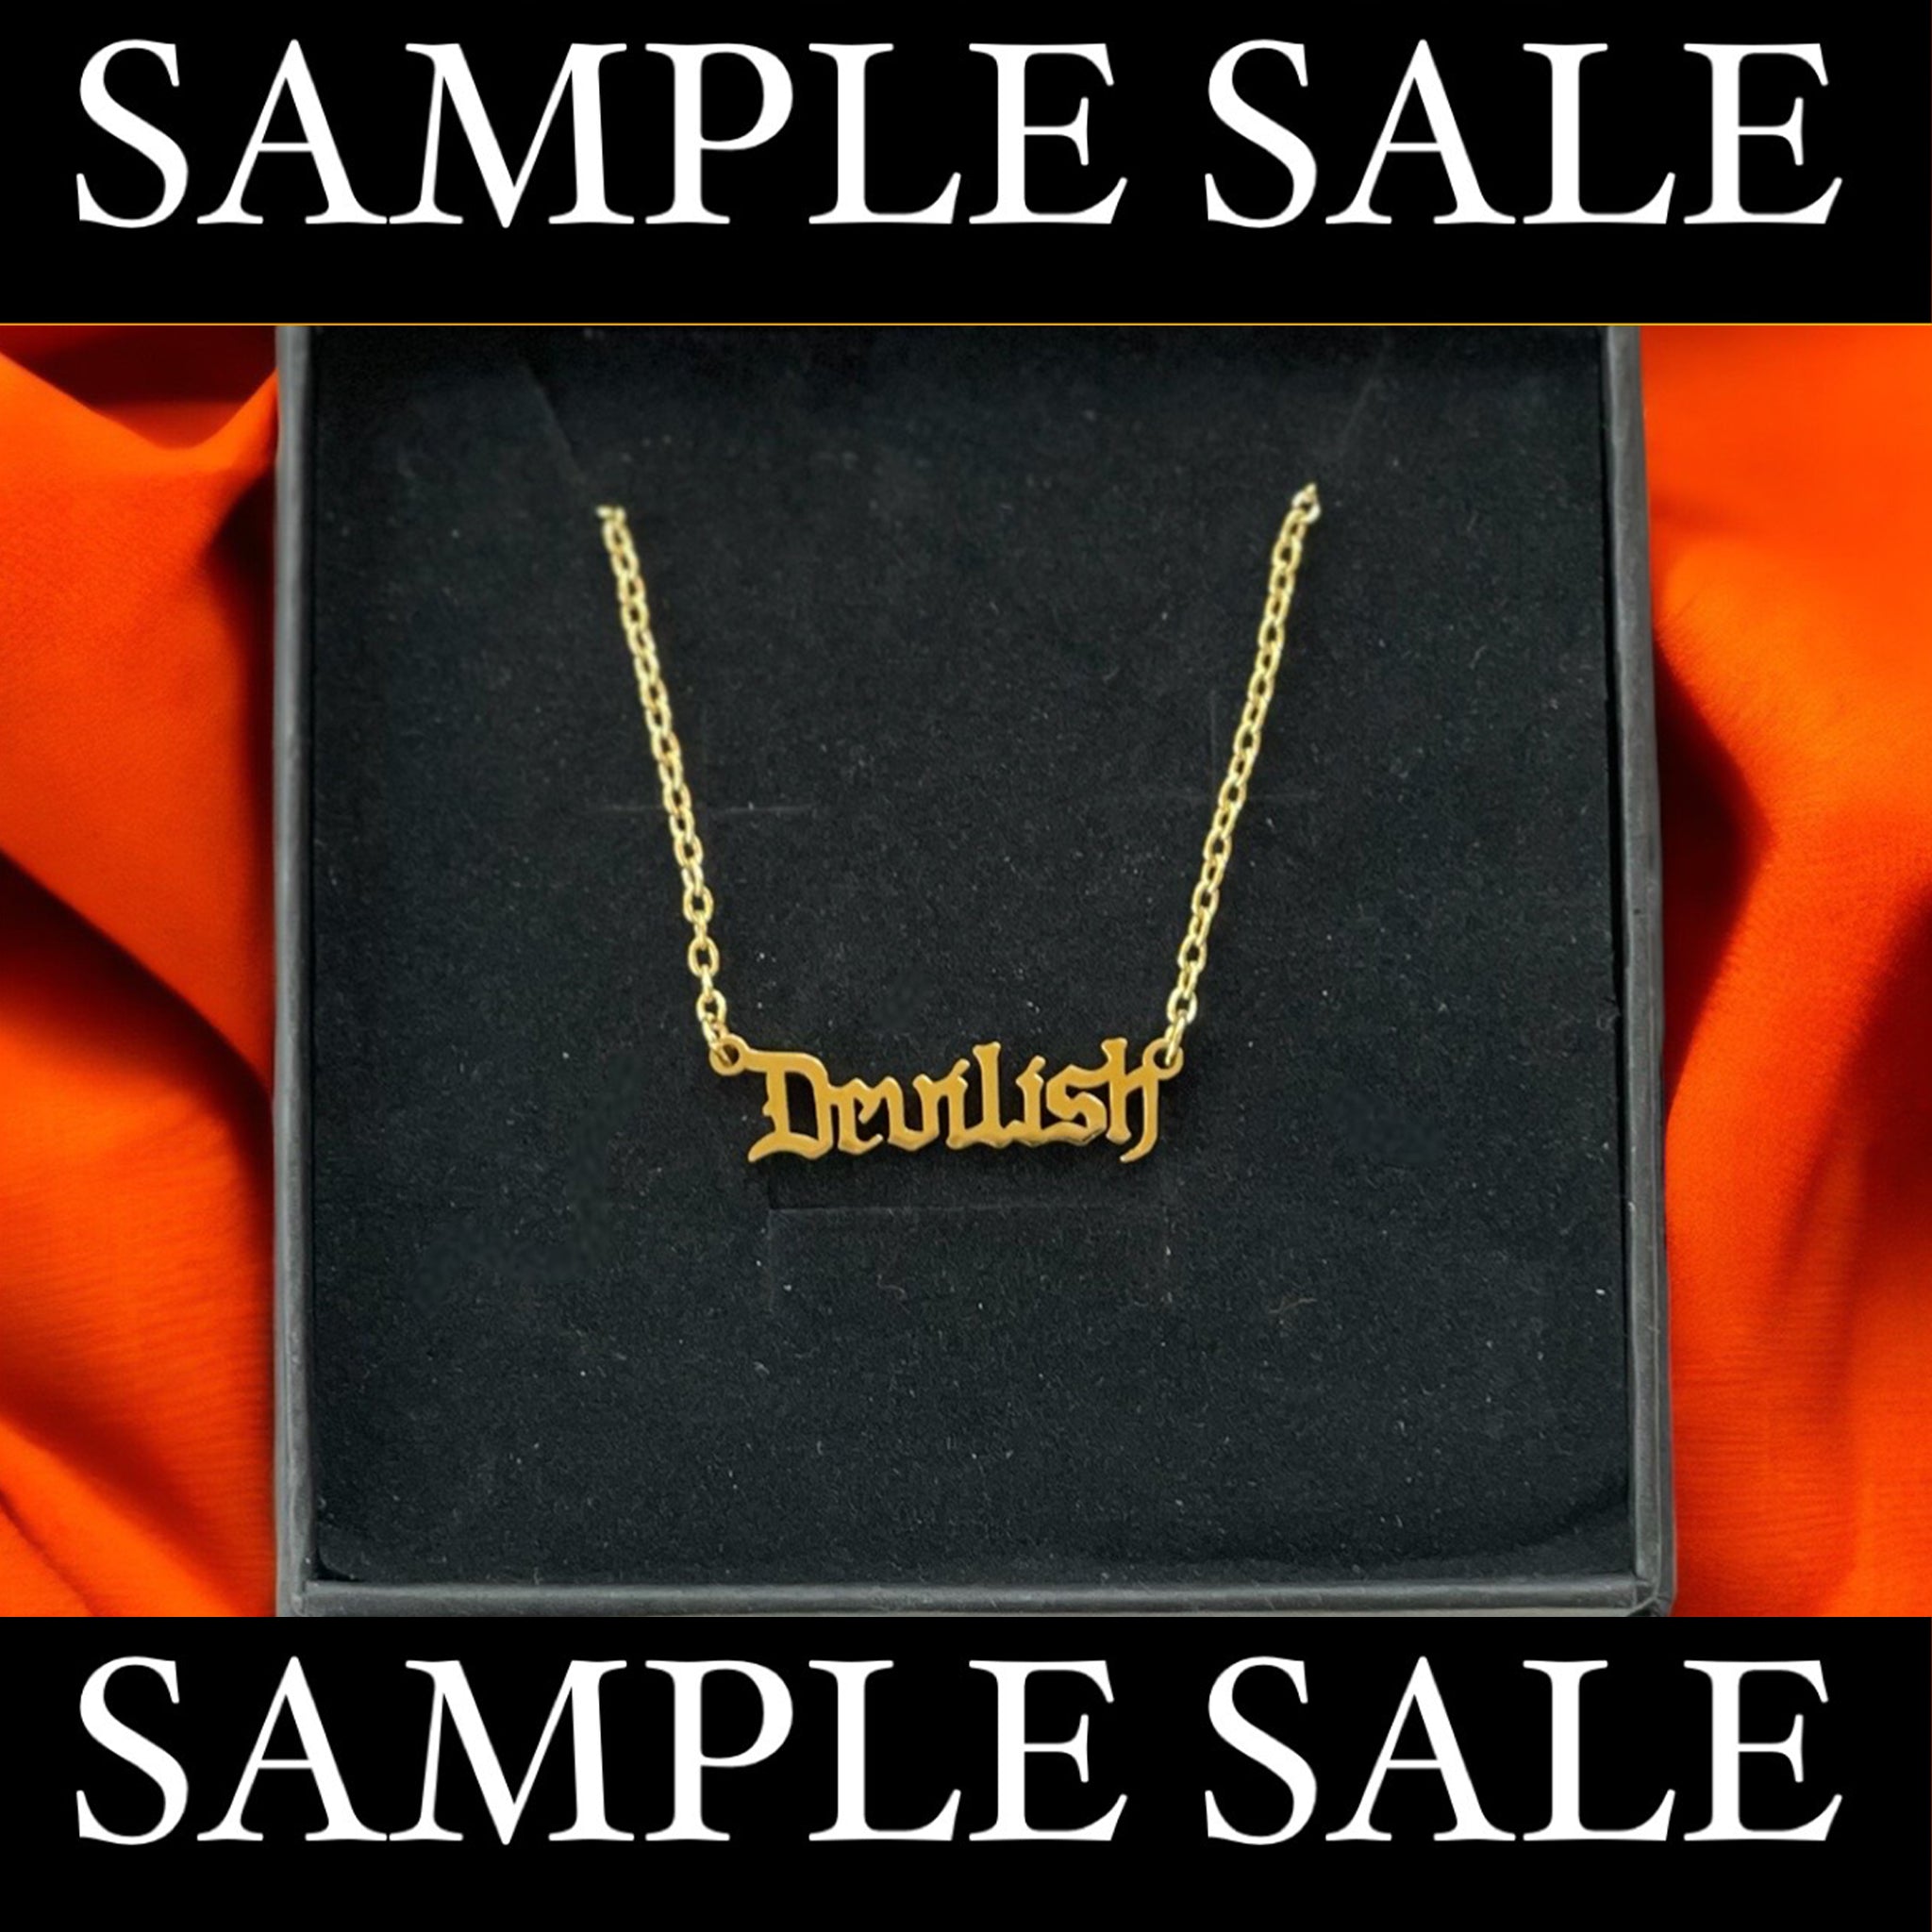 [SAMPLE SALE] Devilish Necklace